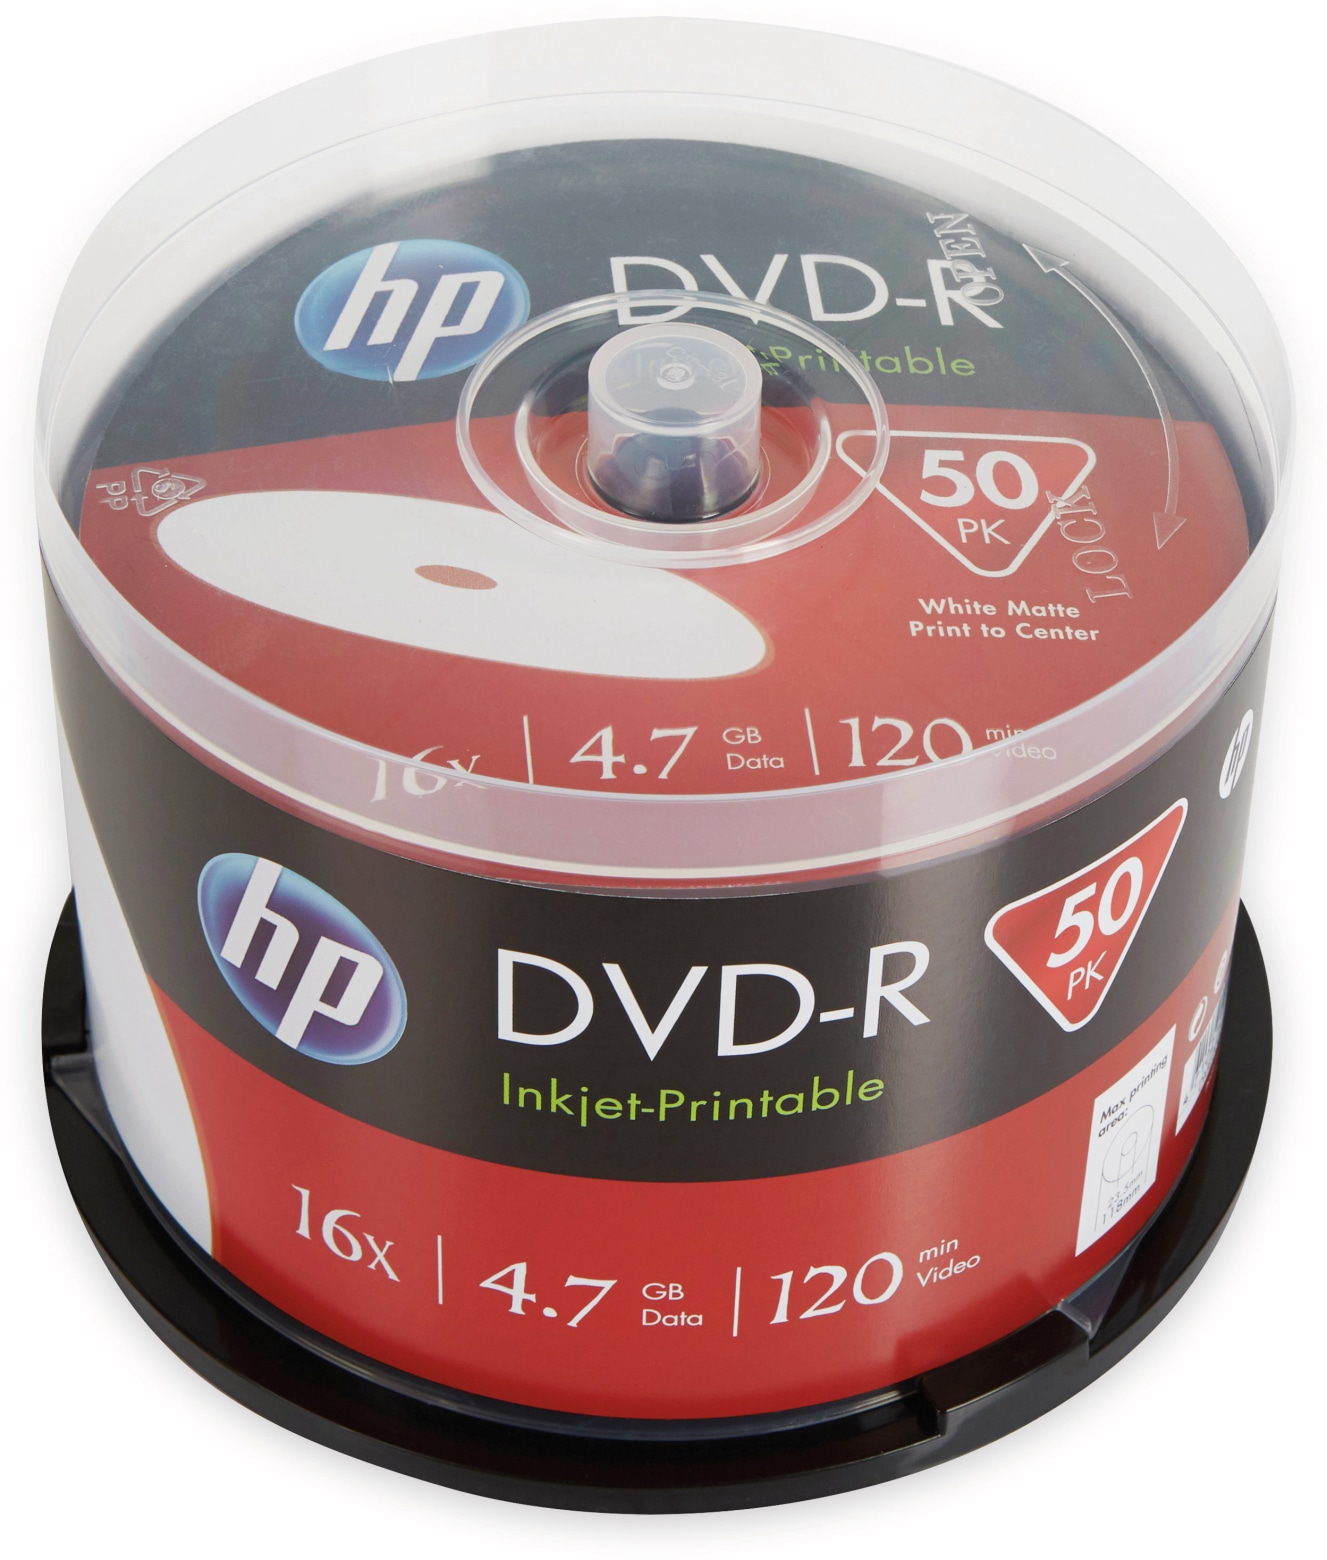 HP DVD-R 4.7GB, 120Min, 16x, Cakebox, 50 CDs, bedruckbar